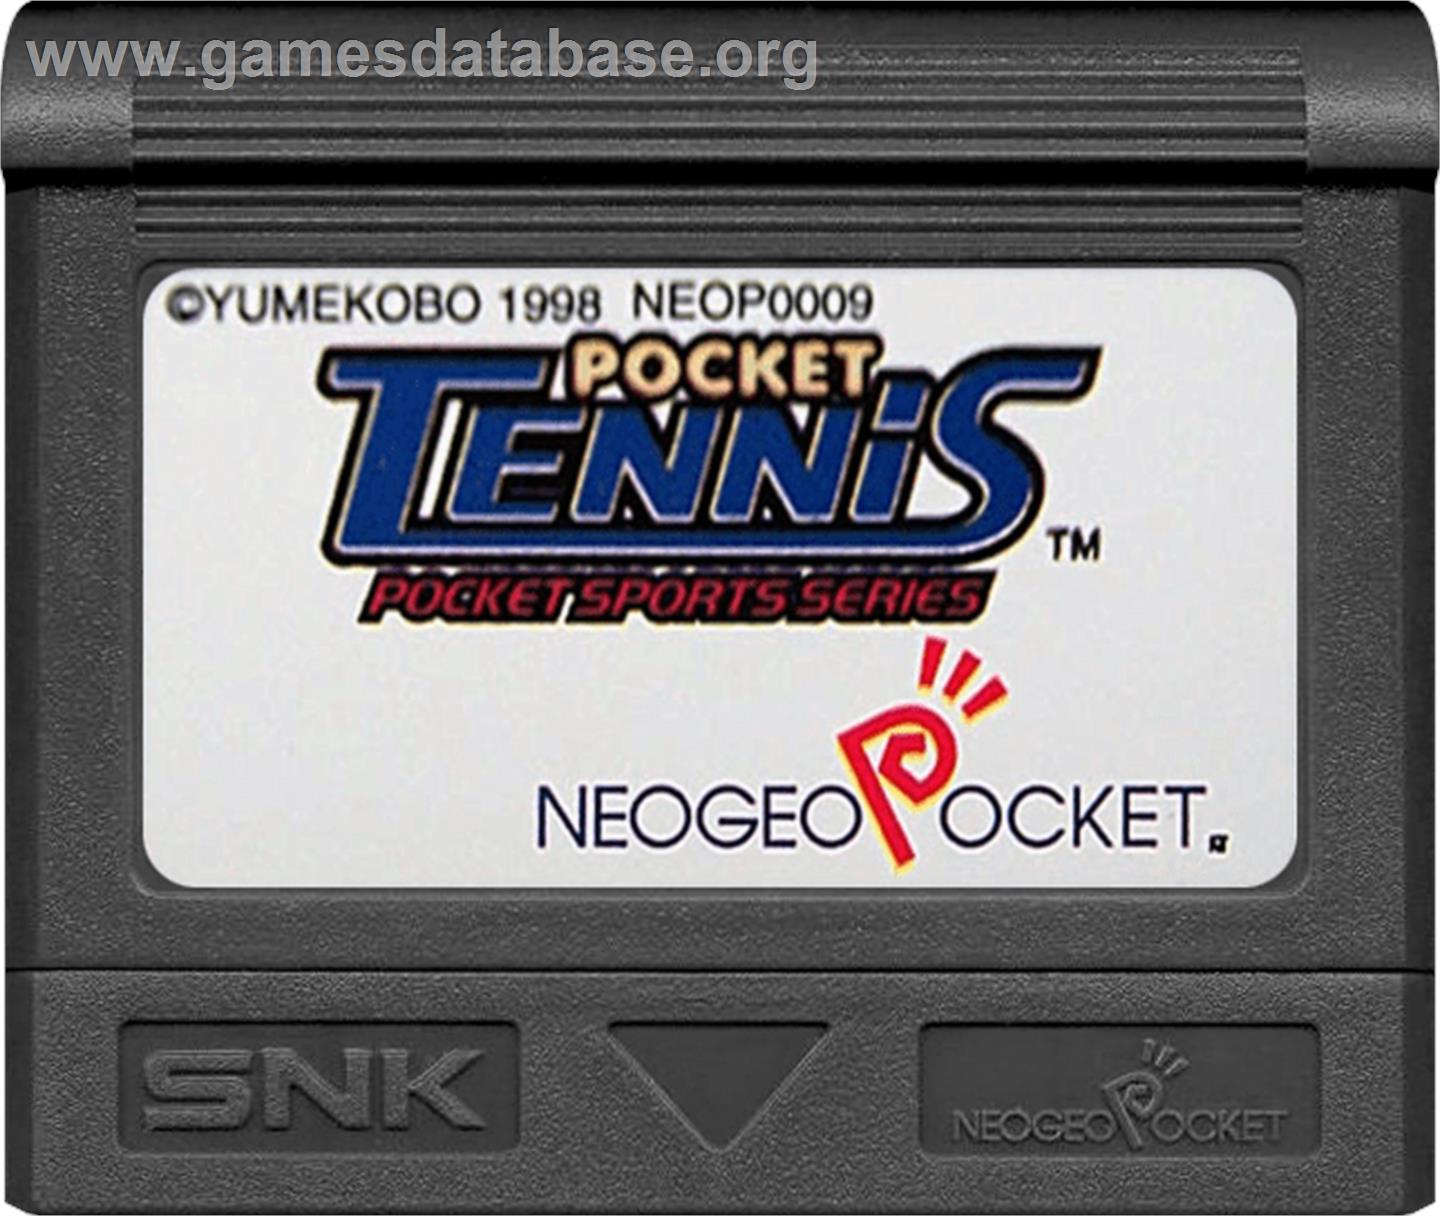 Pocket Tennis!: Pocket Sports Series - SNK Neo-Geo Pocket - Artwork - Cartridge